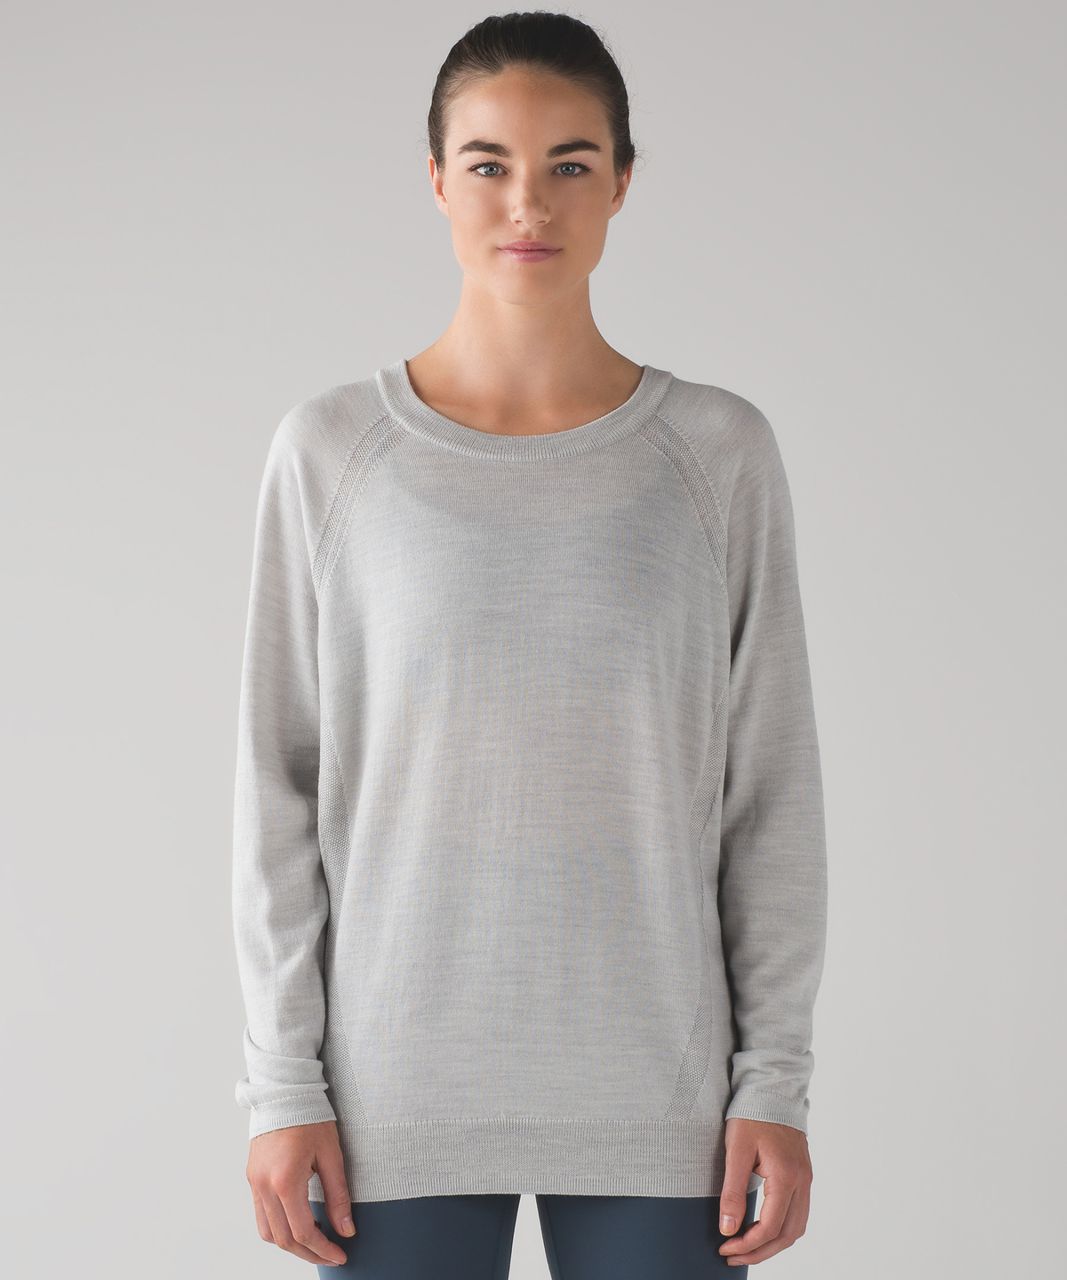 Lululemon Rising Salutation Sweater - Heathered Vapor